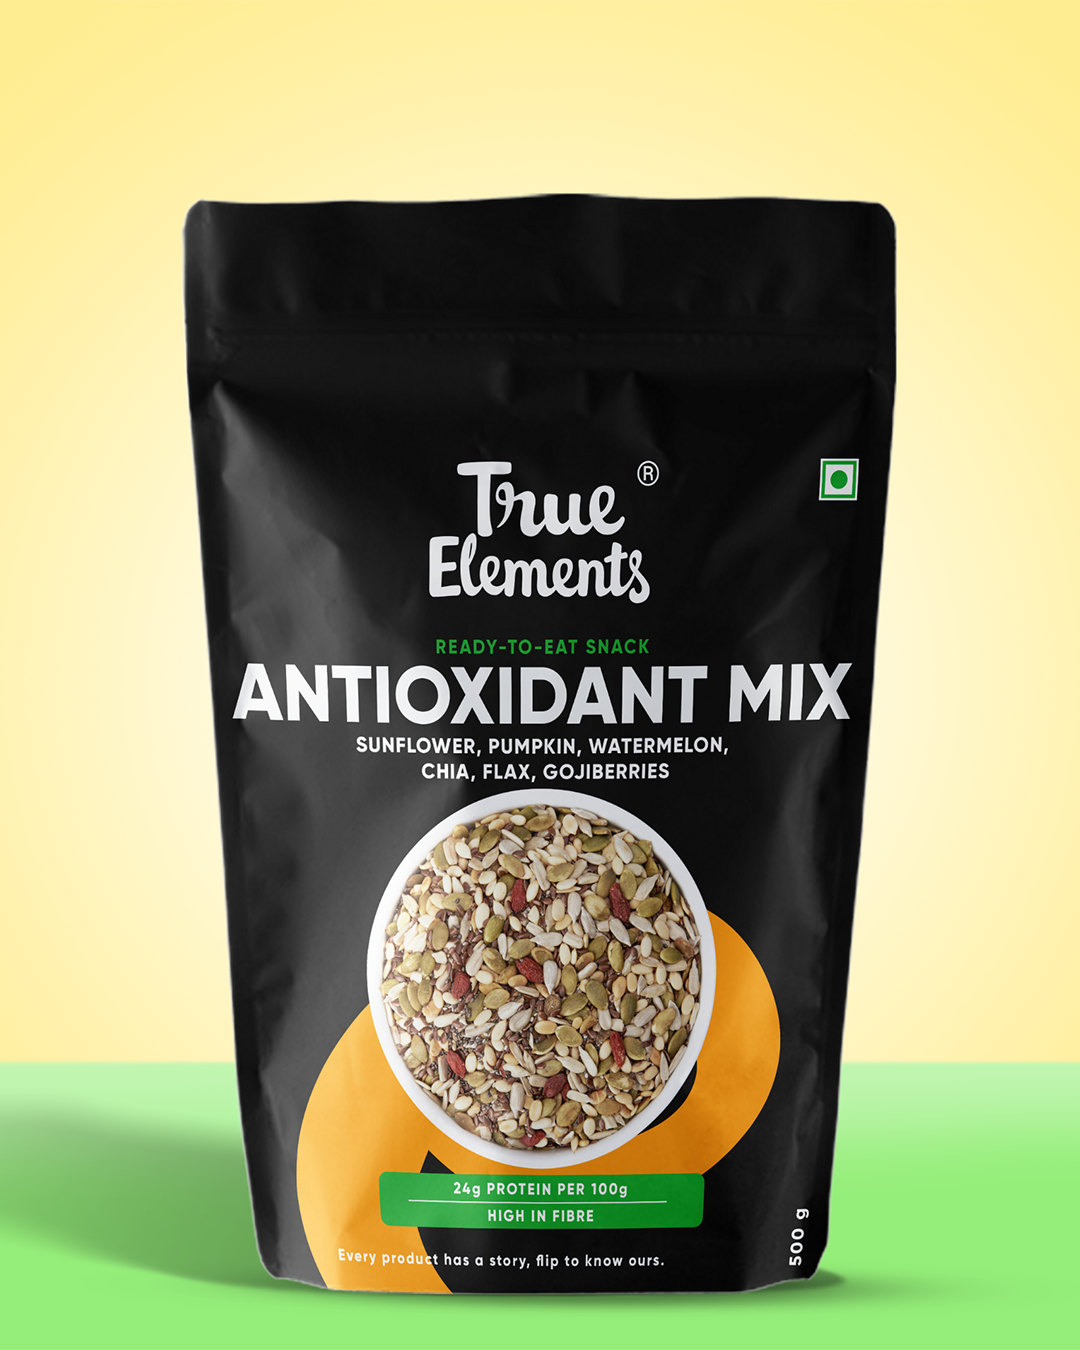 Antioxidant mix with sunflower, pumpkin, watermelon, chia, flax, gojiberries in 500g pouch.